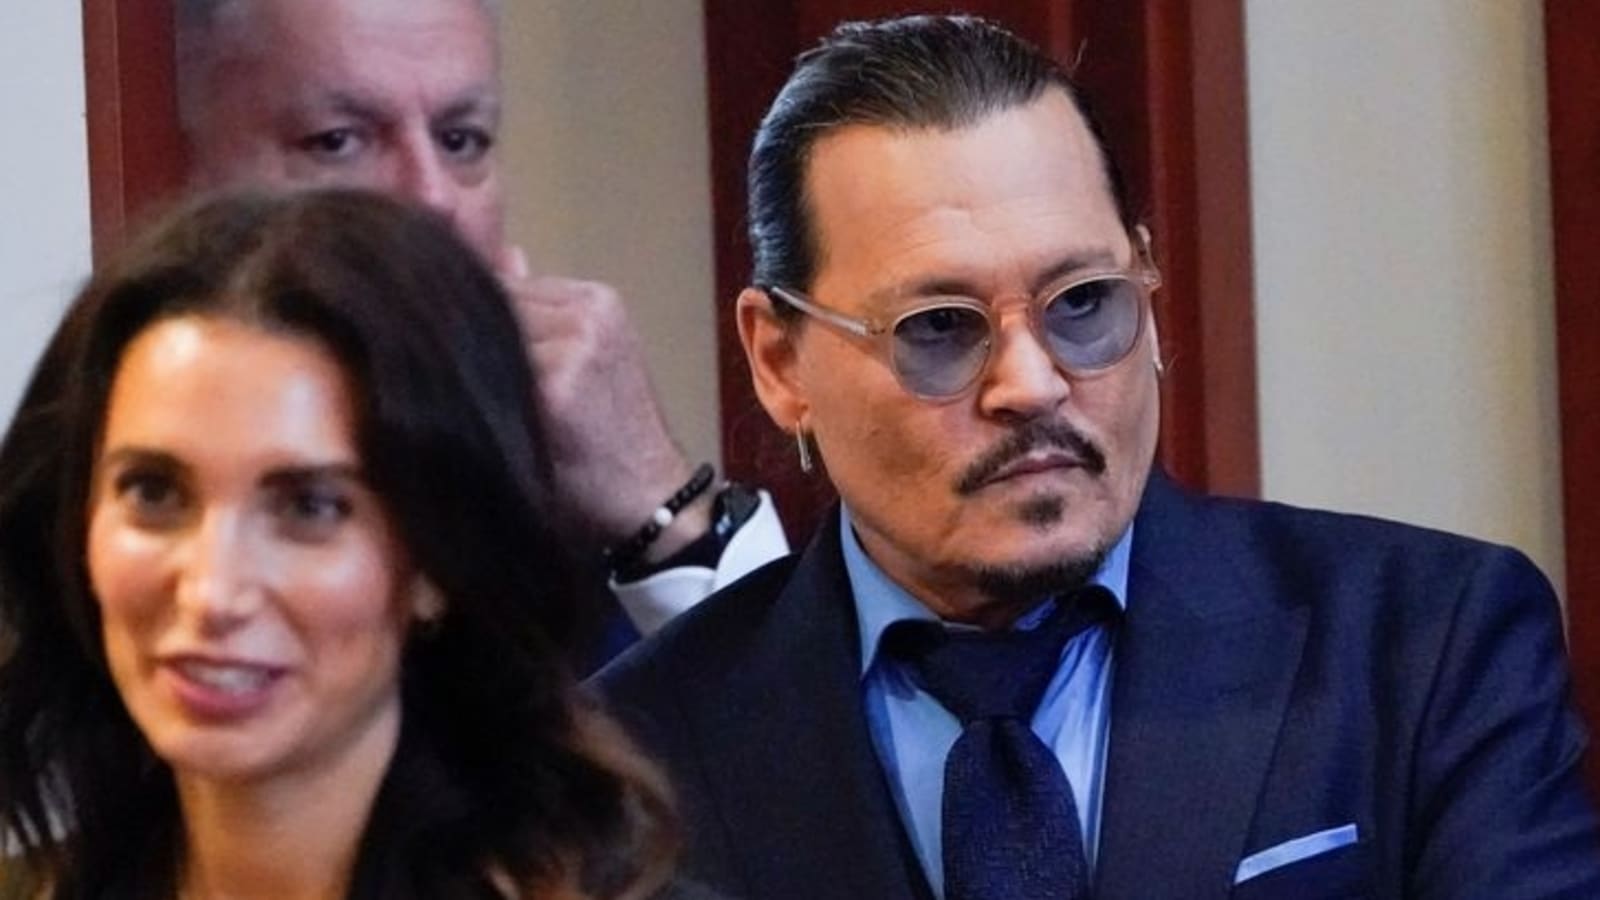 Six weeks on, jury finally gets closing arguments in Depp trial